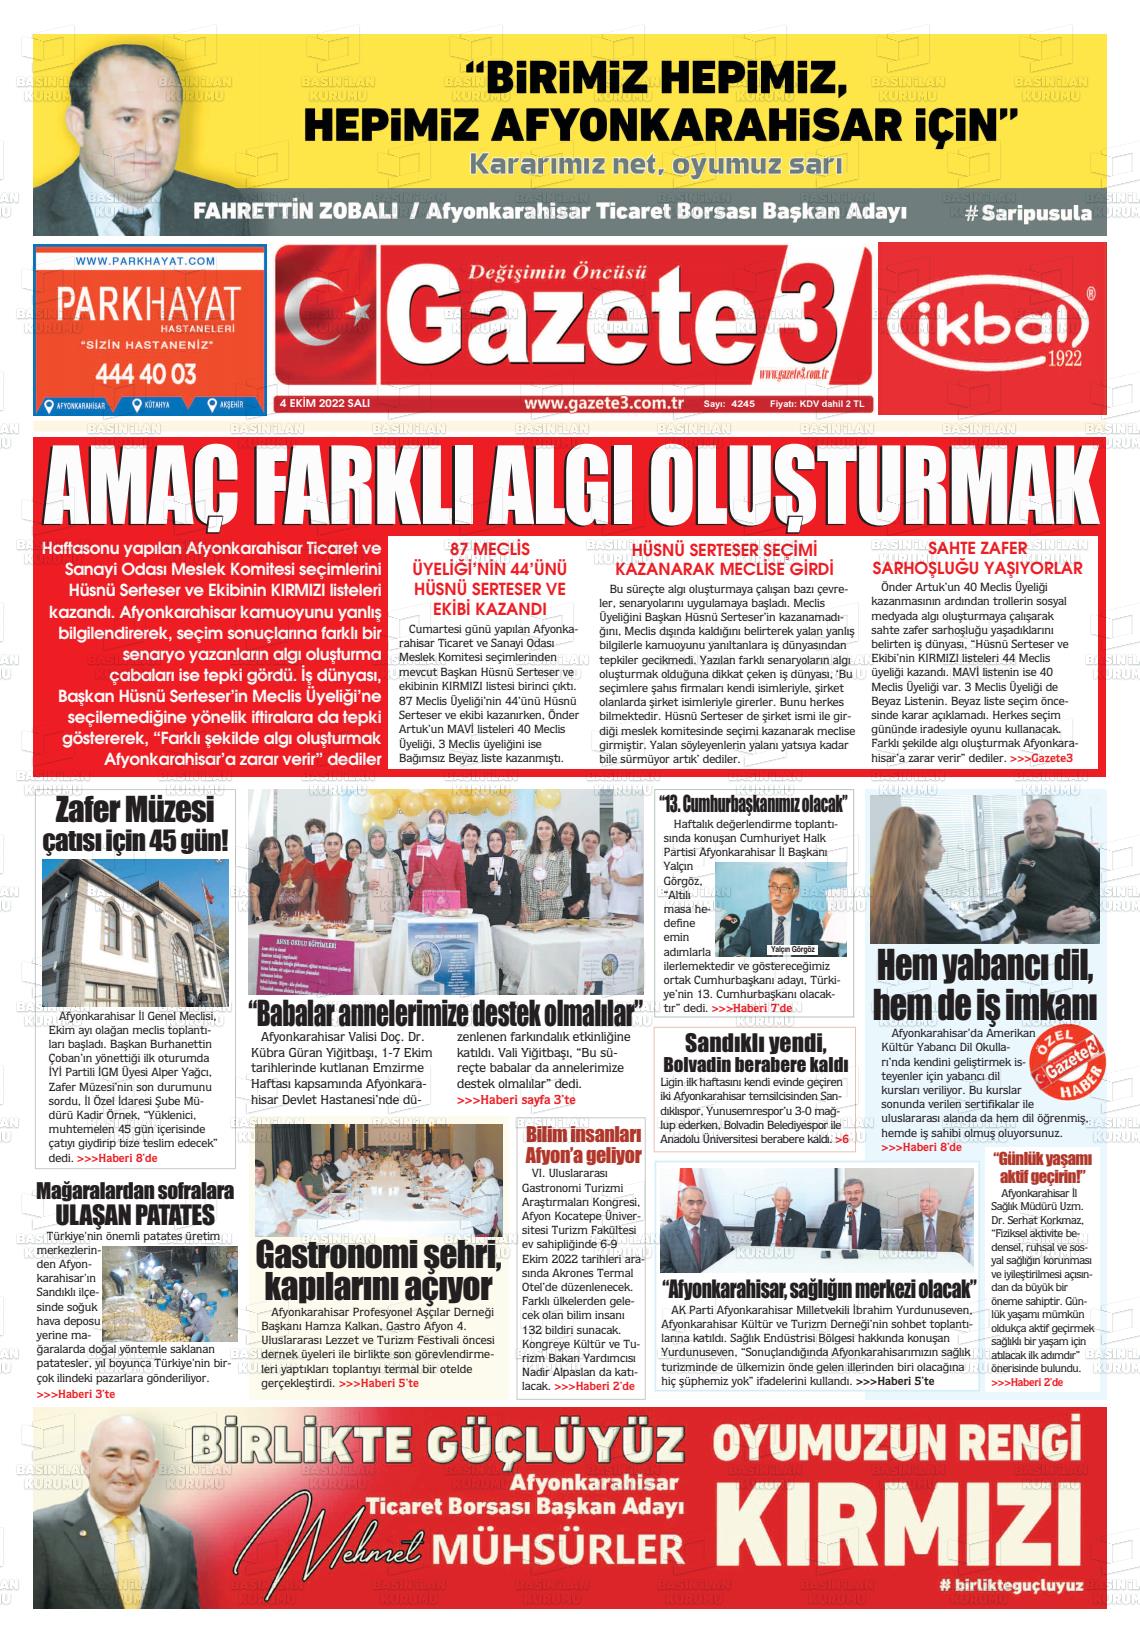 04 Ekim 2022 Gazete 3 Gazete Manşeti